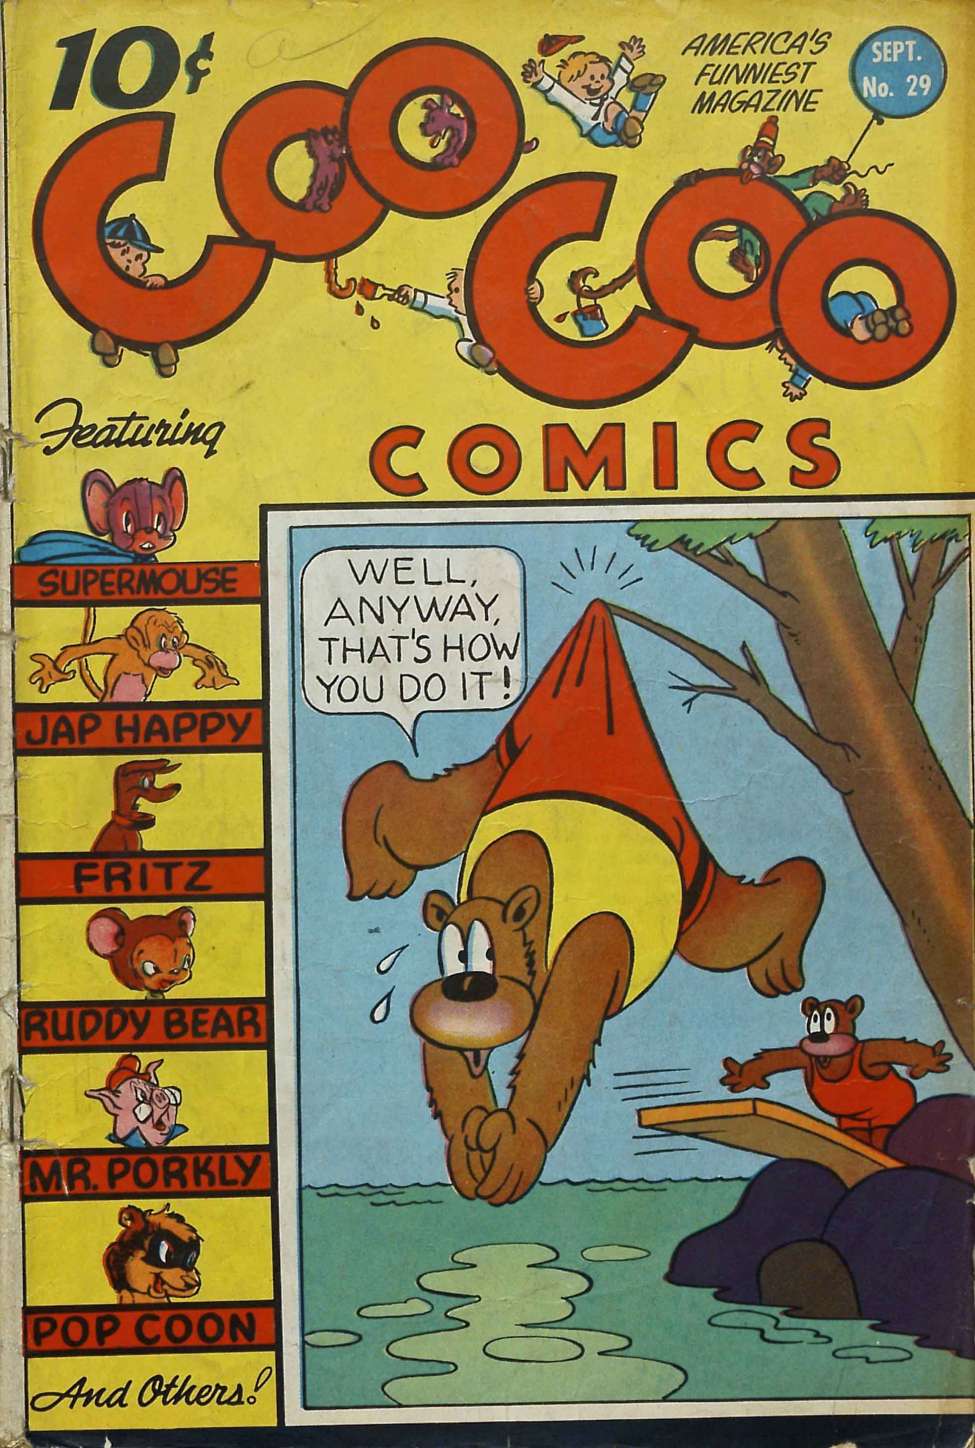 Comic Book Cover For Coo Coo Comics 29